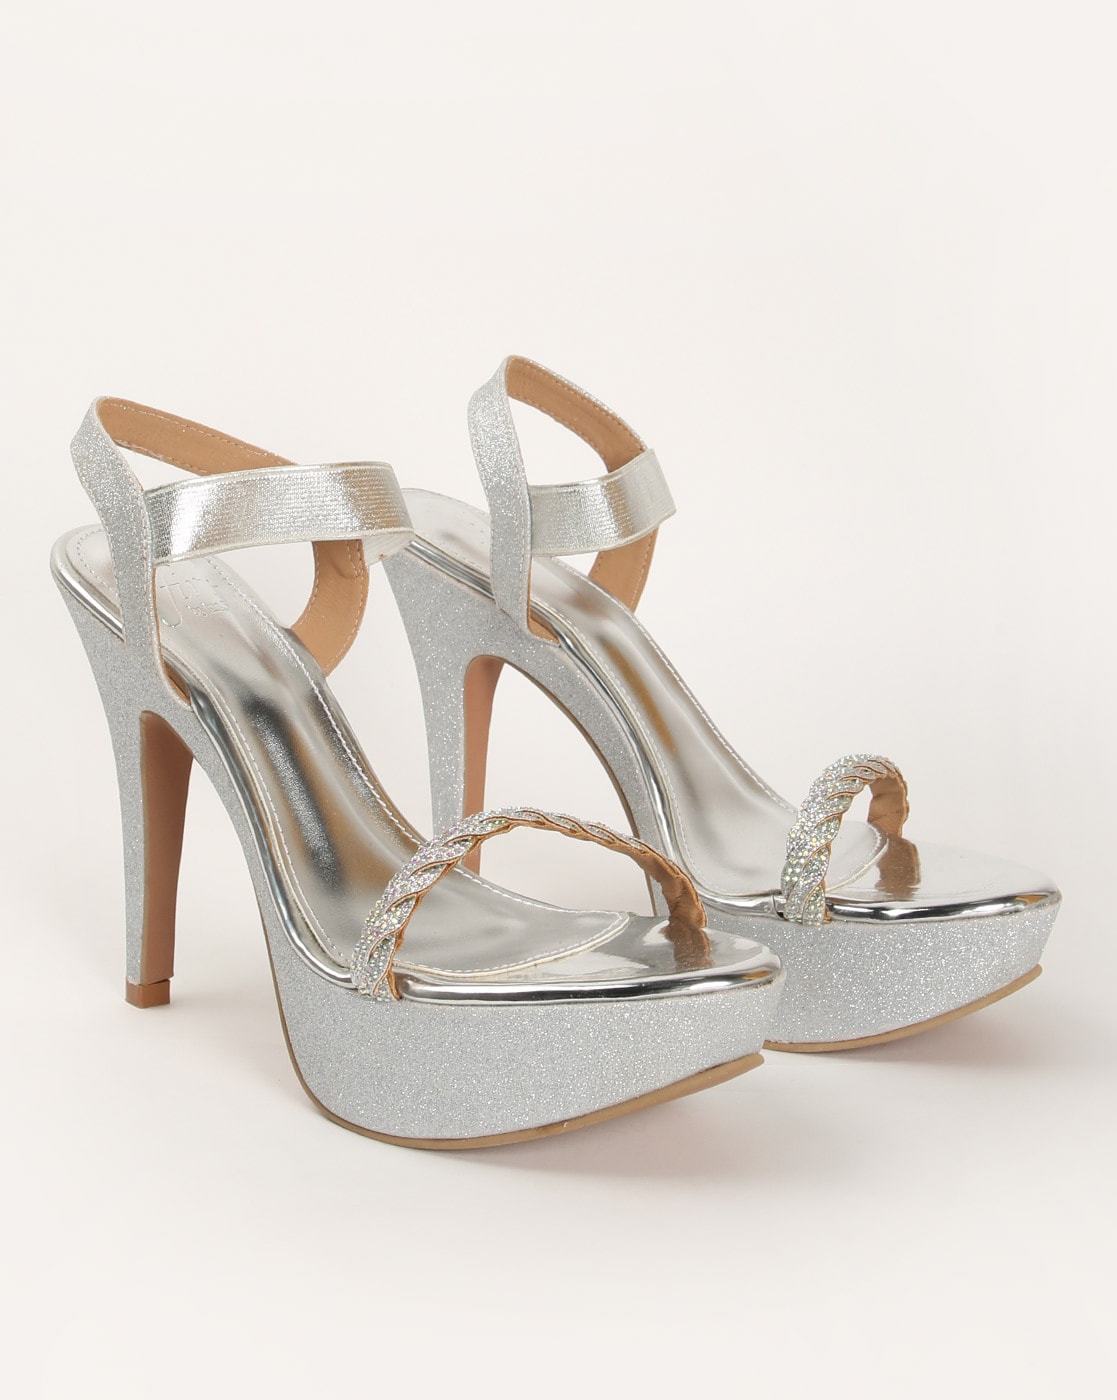 Pimfylm Silver Heels Mary Janes Shoes Women Platform Low Heel Pumps Round  Toe Ankle Strap Gold 8 - Walmart.com